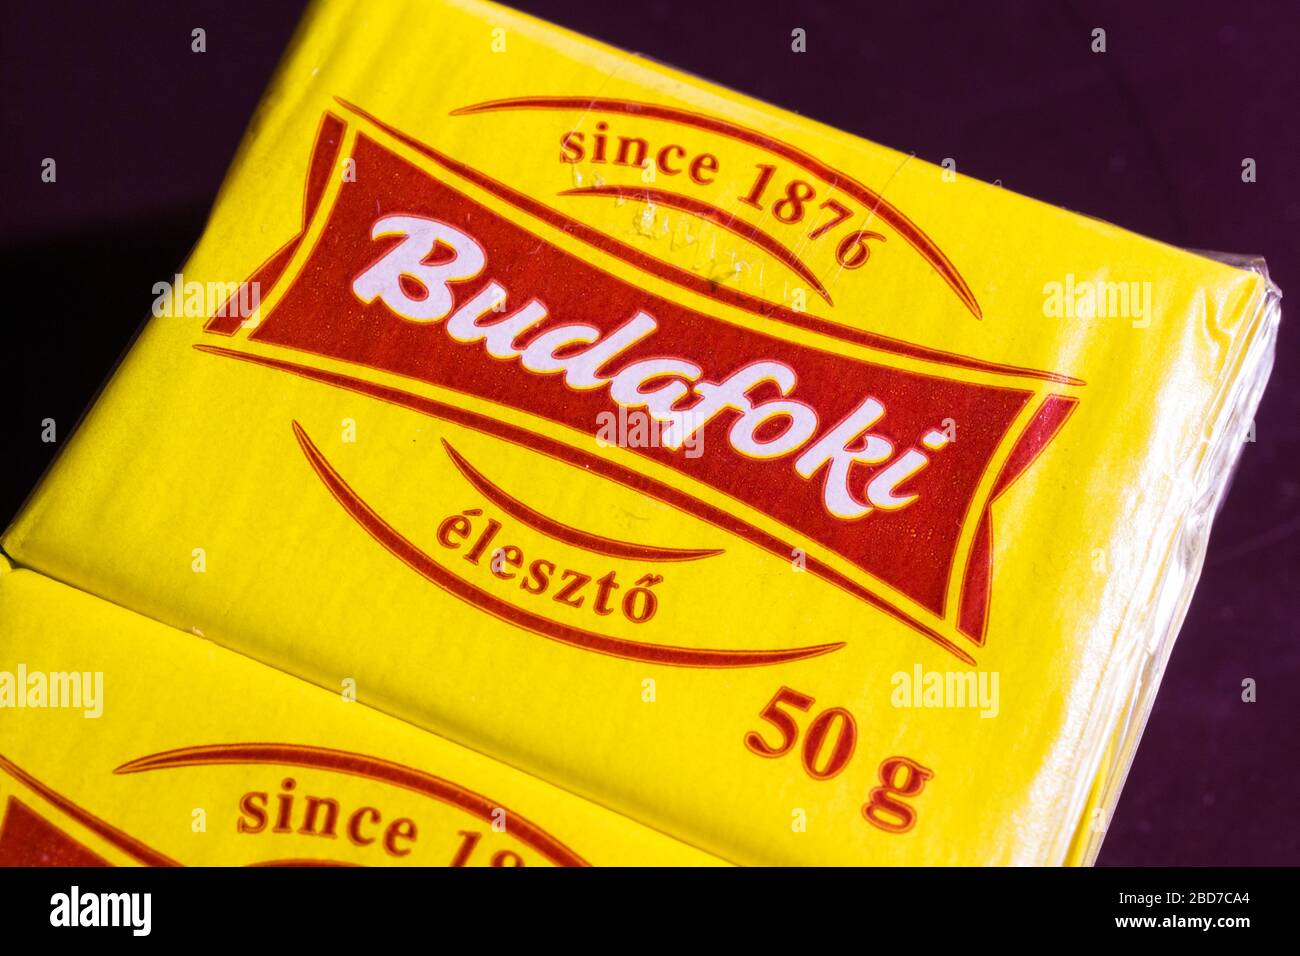 Hungarian Bodafoki Yeast (eleszto) 50g in yellow wrapper Stock Photo